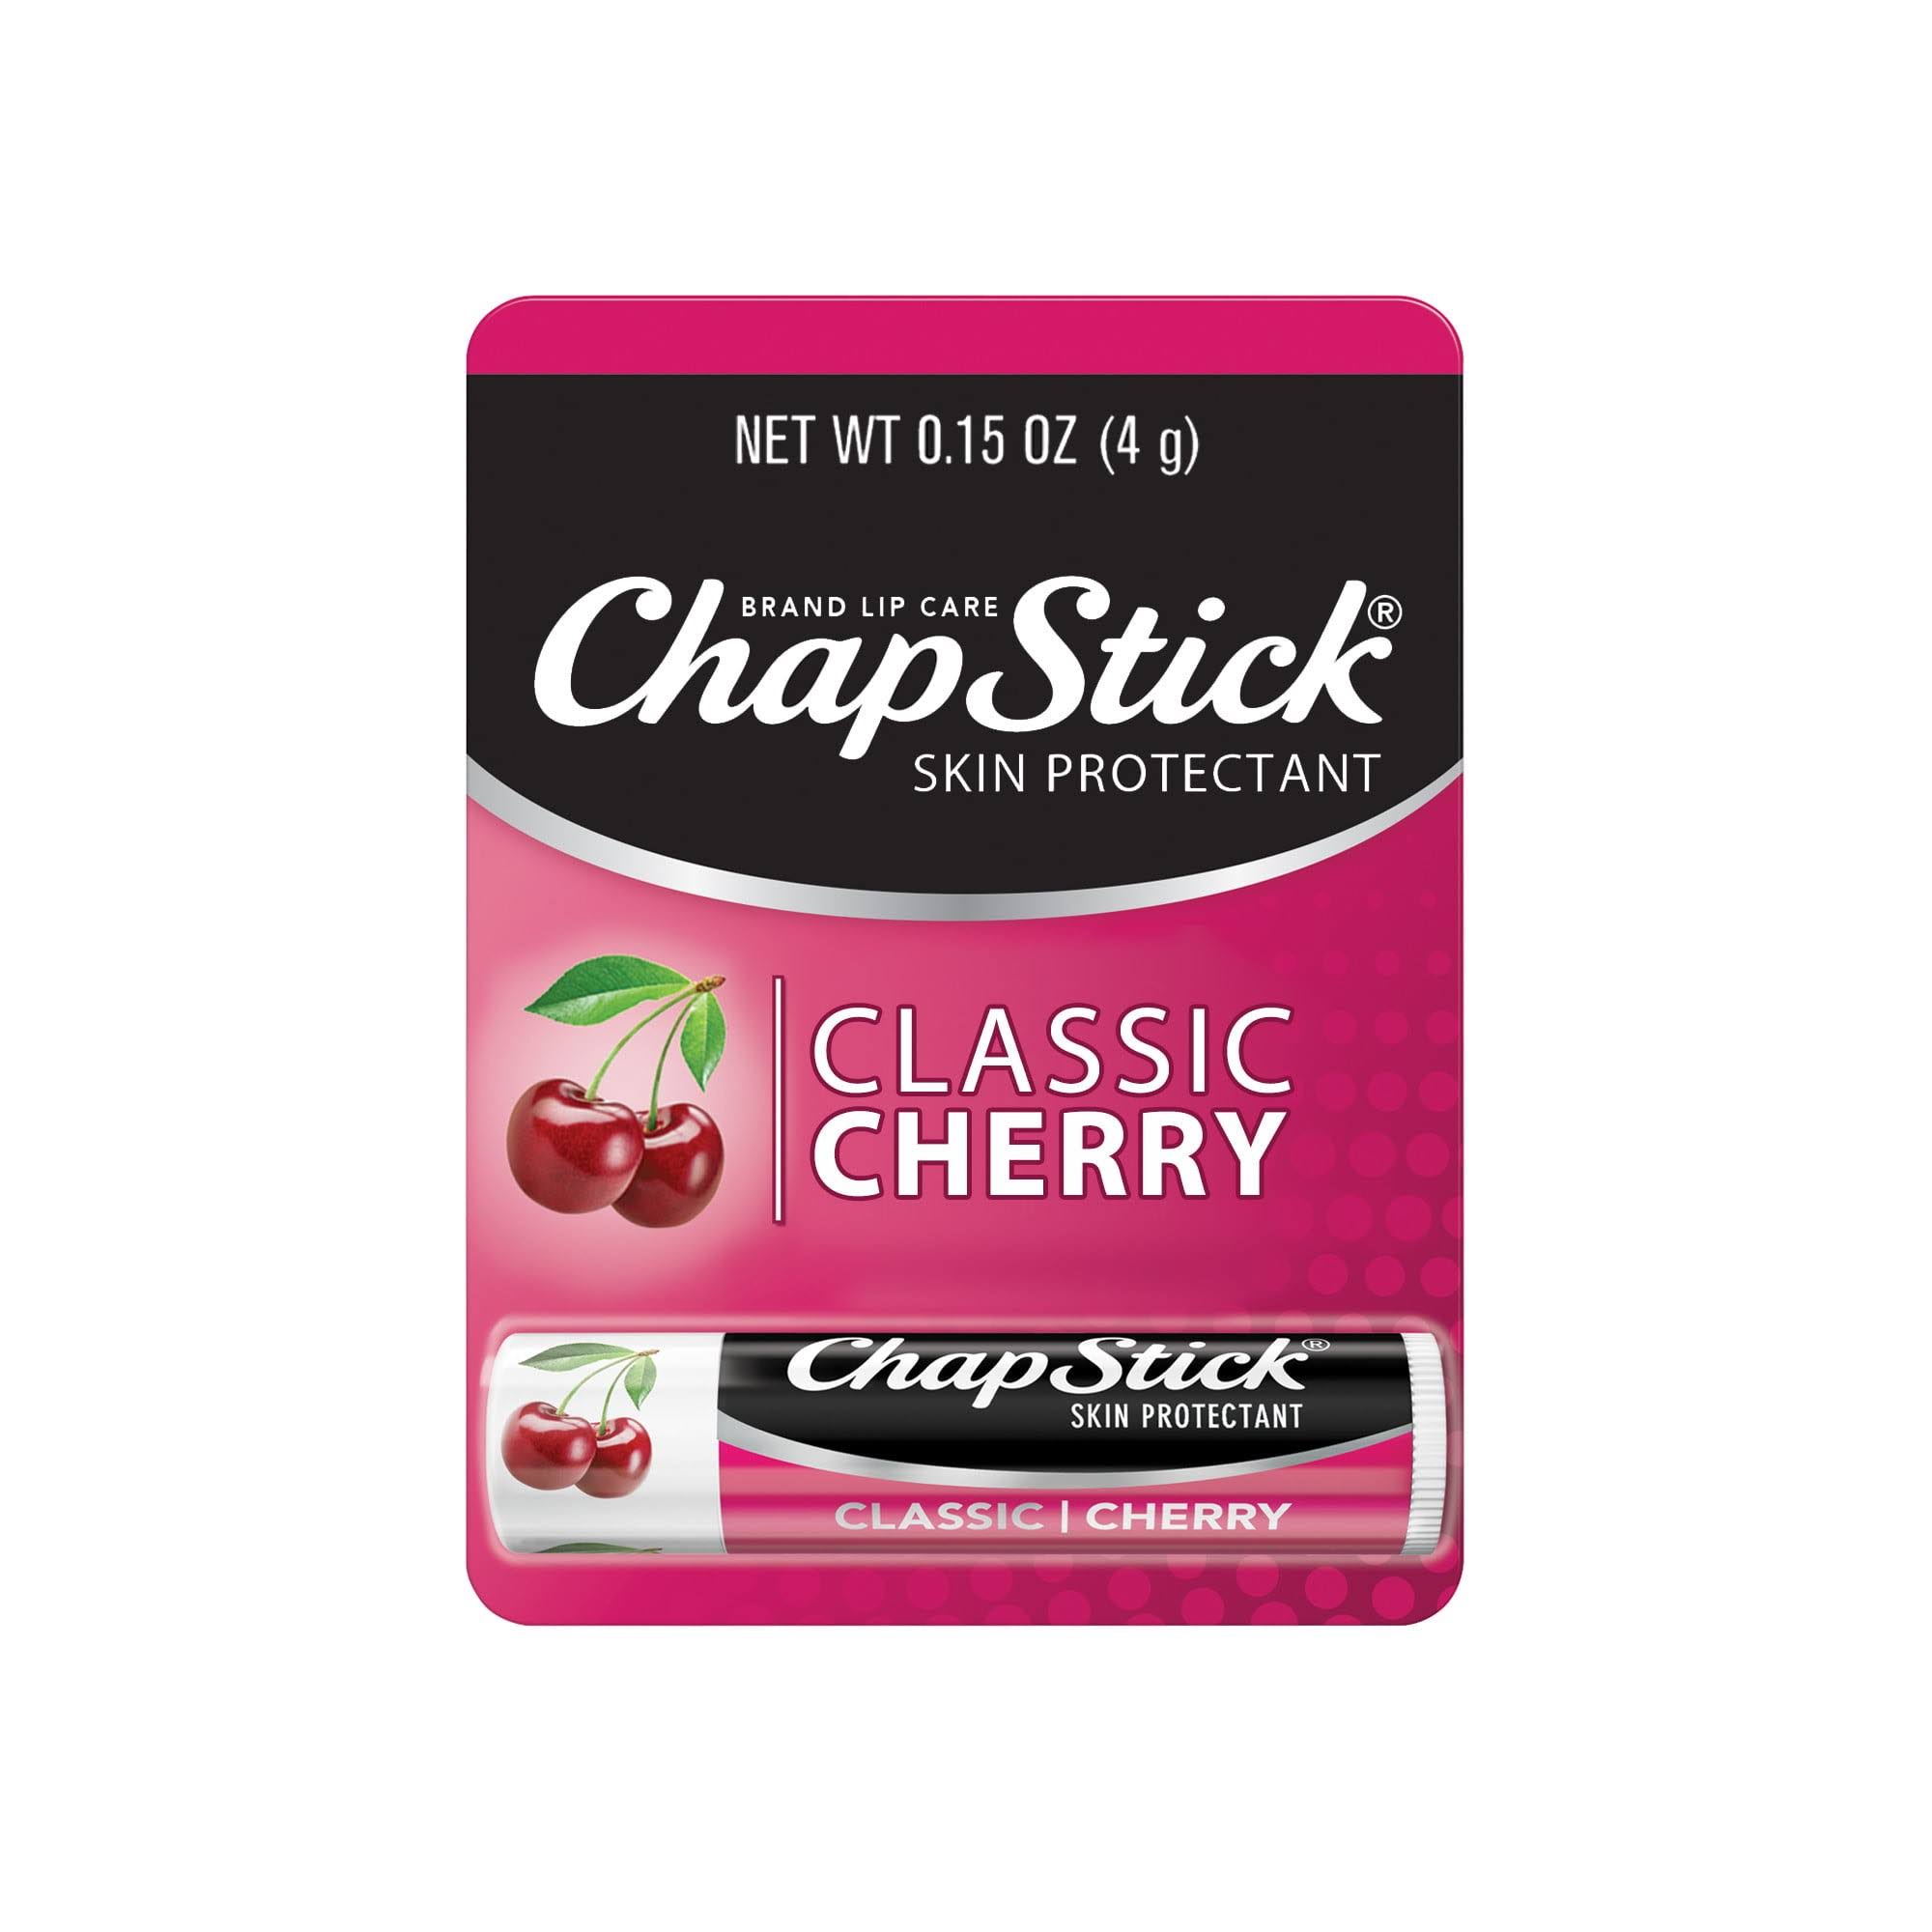 Chap Stick Classic Lip Balm Tube - Cherry Flavor, 0.15oz